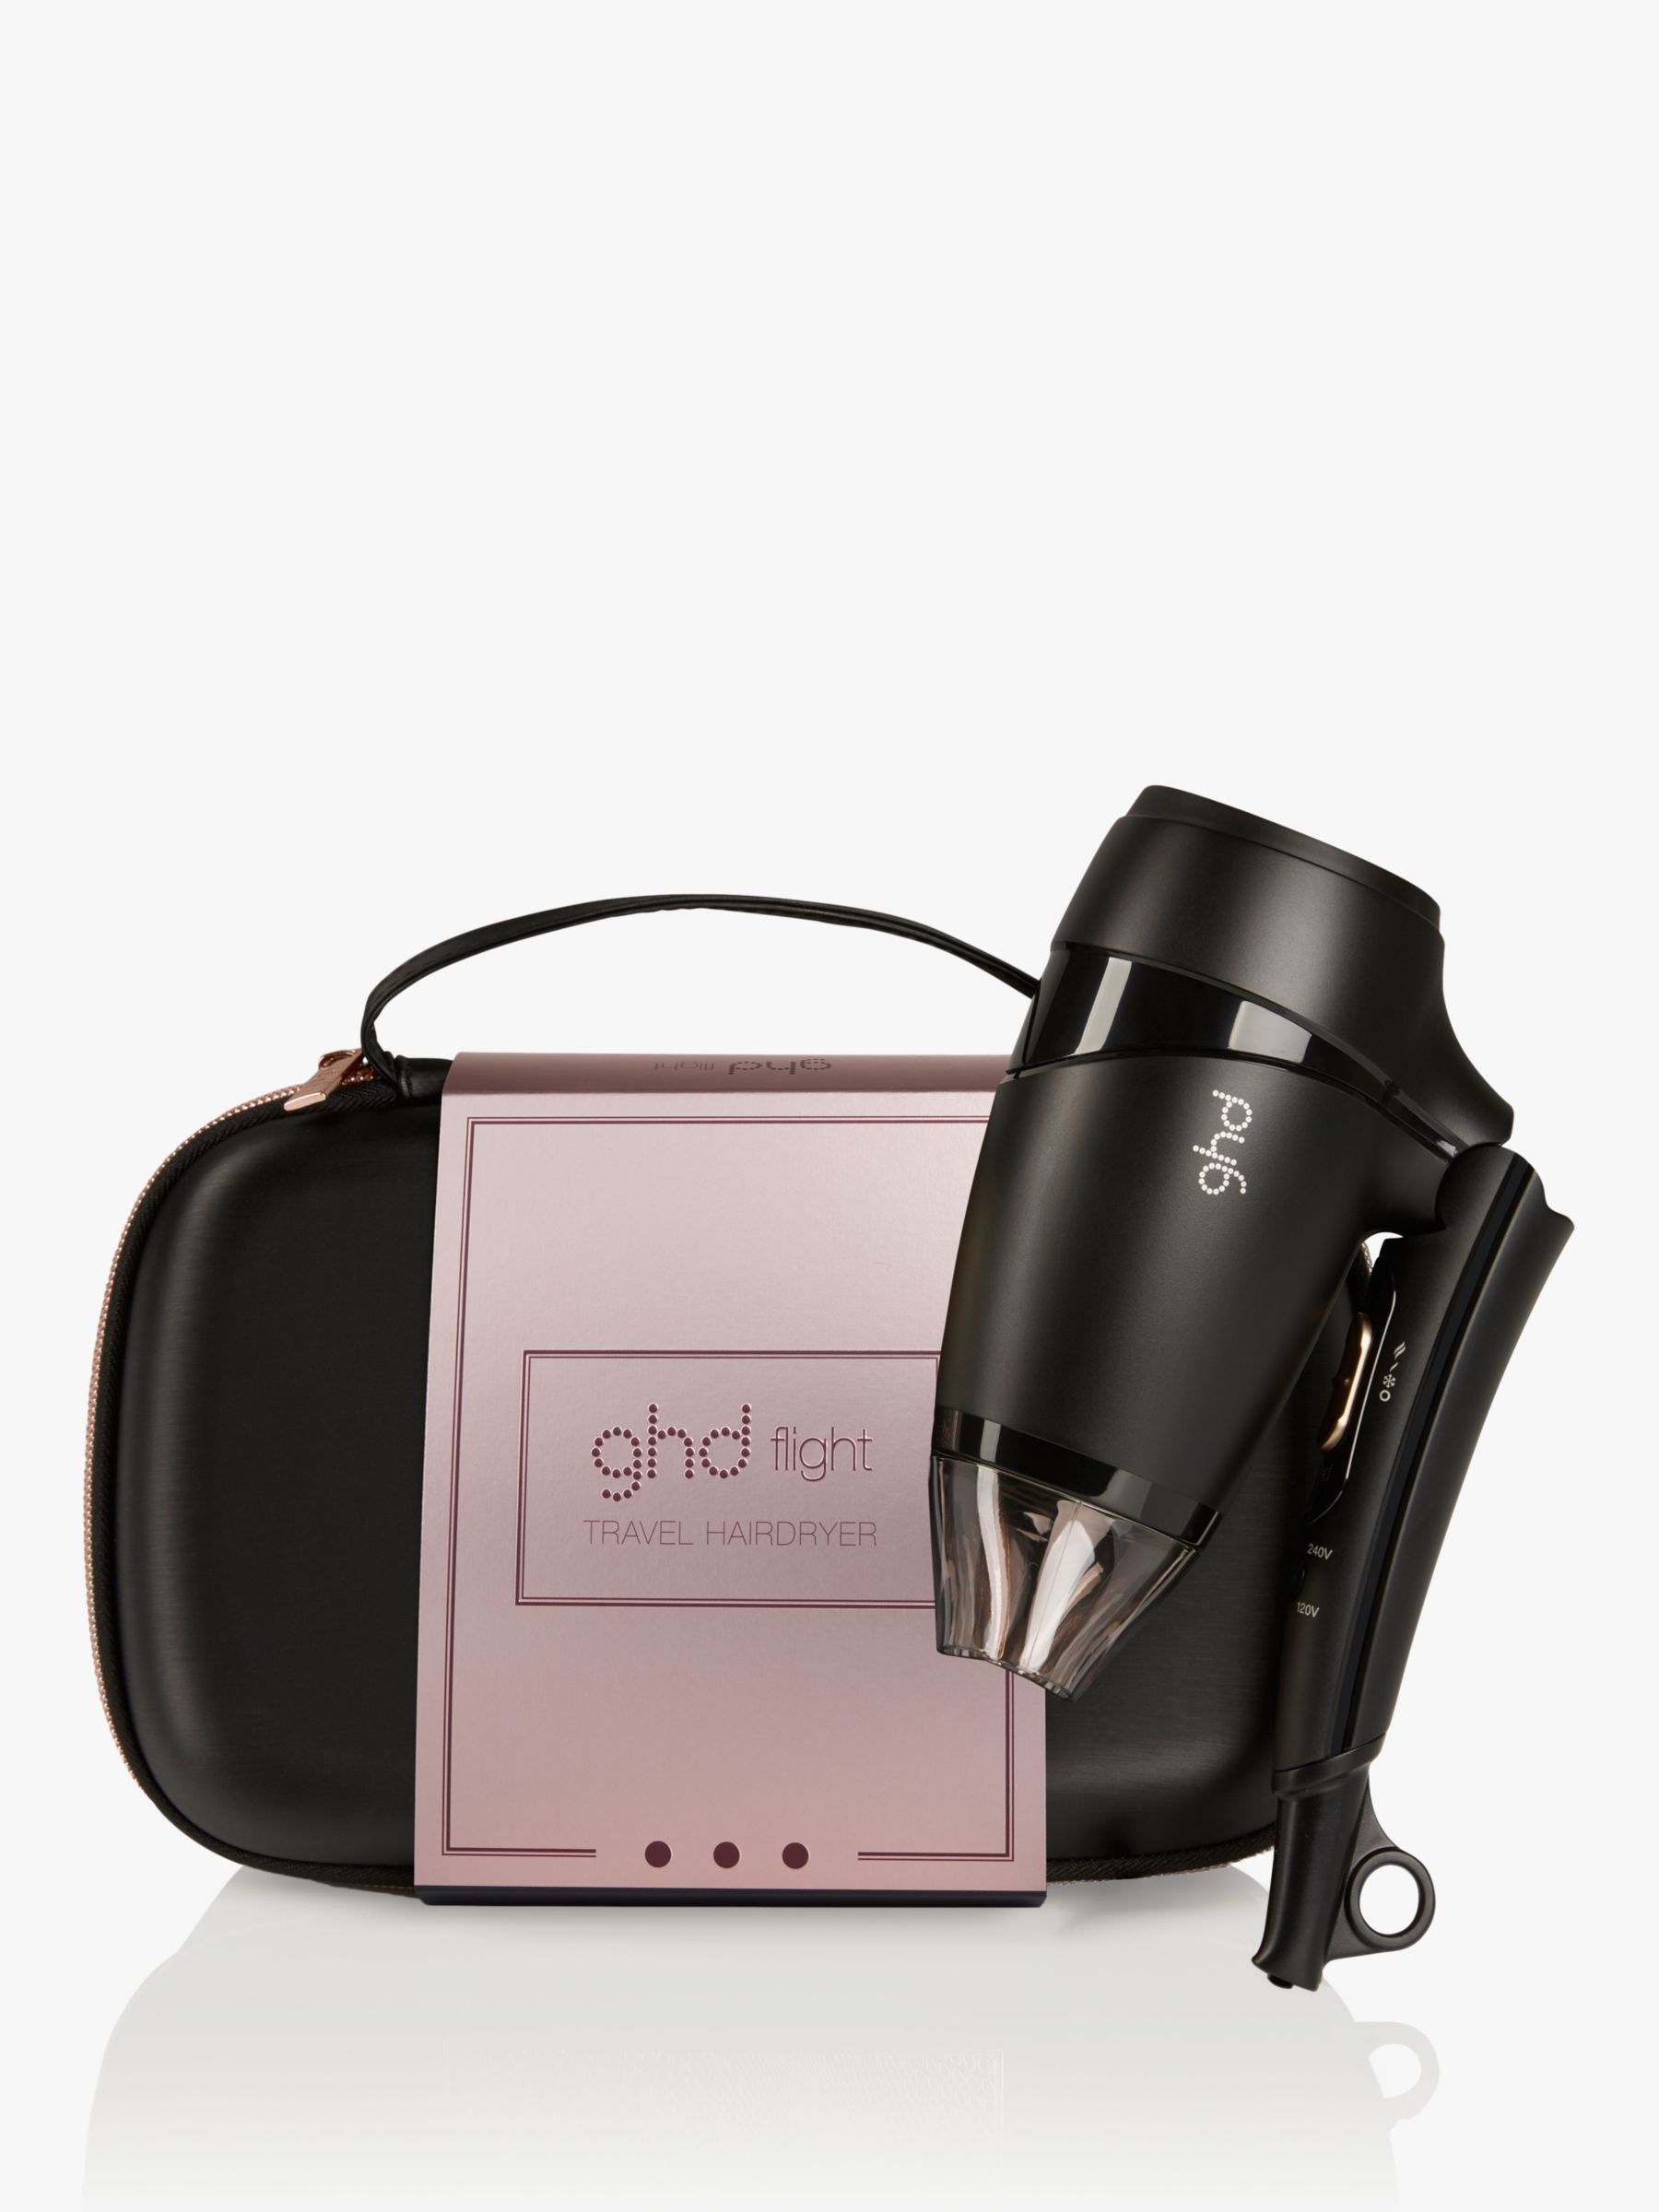 ghd travel hair dryer and straightener set